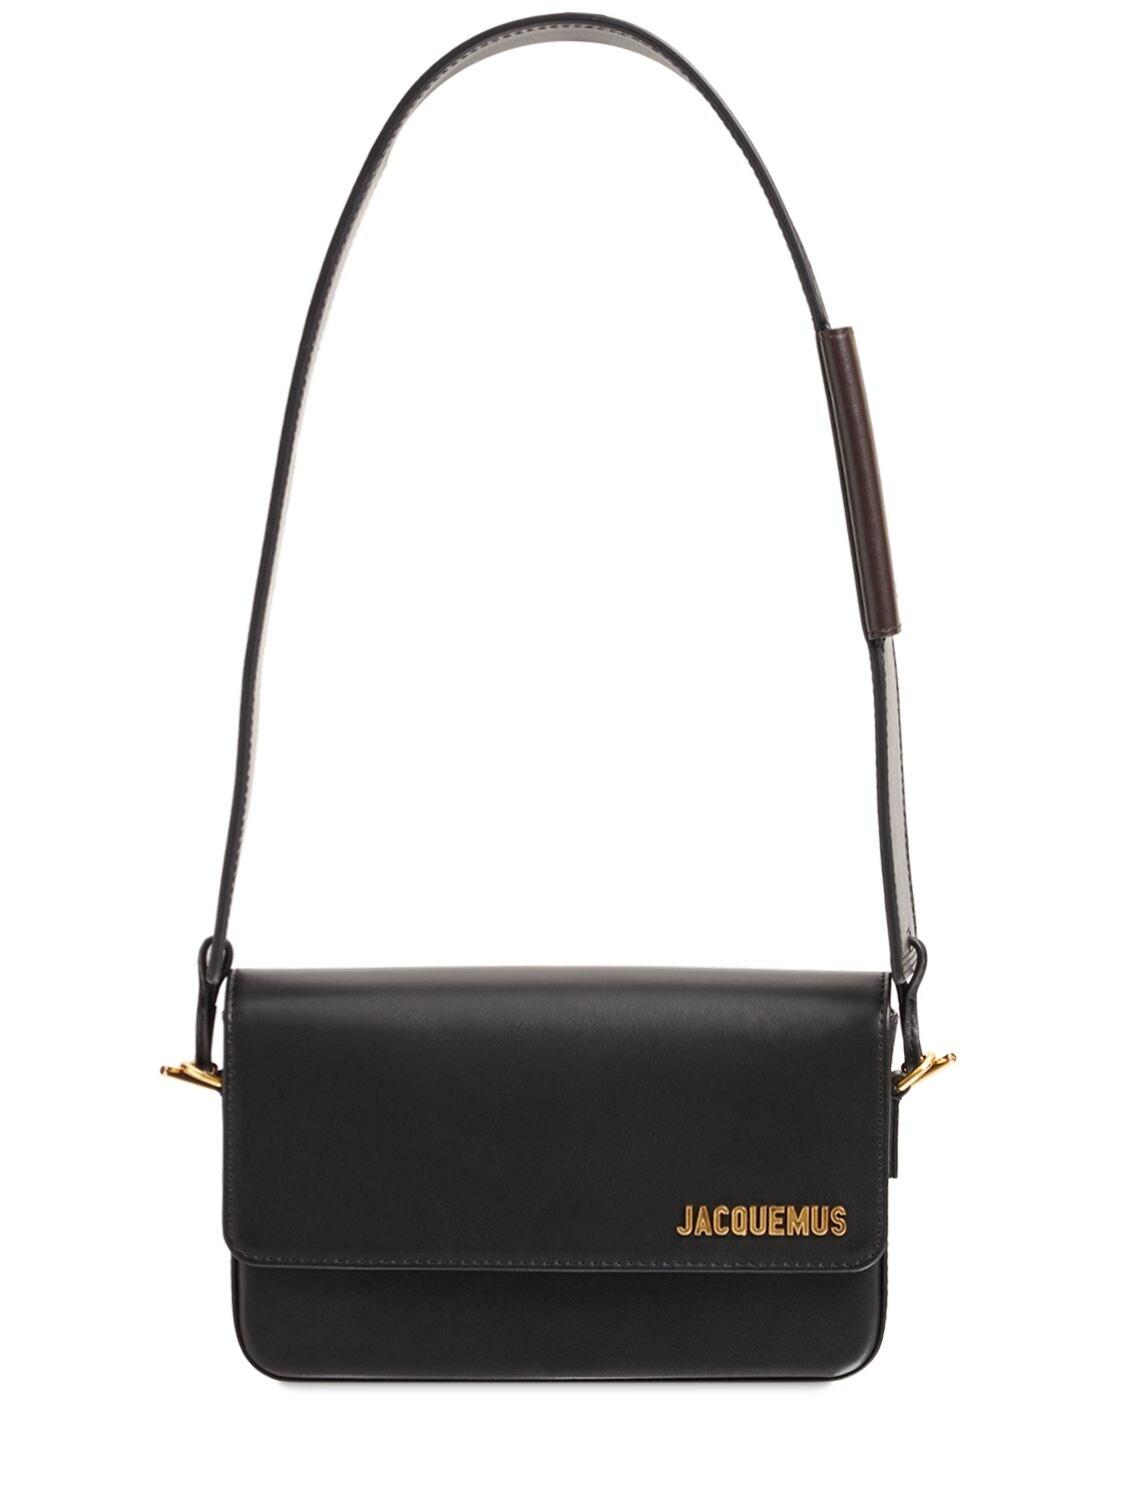 Jacquemus Le Carinu Leather Shoulder Bag in Black | Lyst